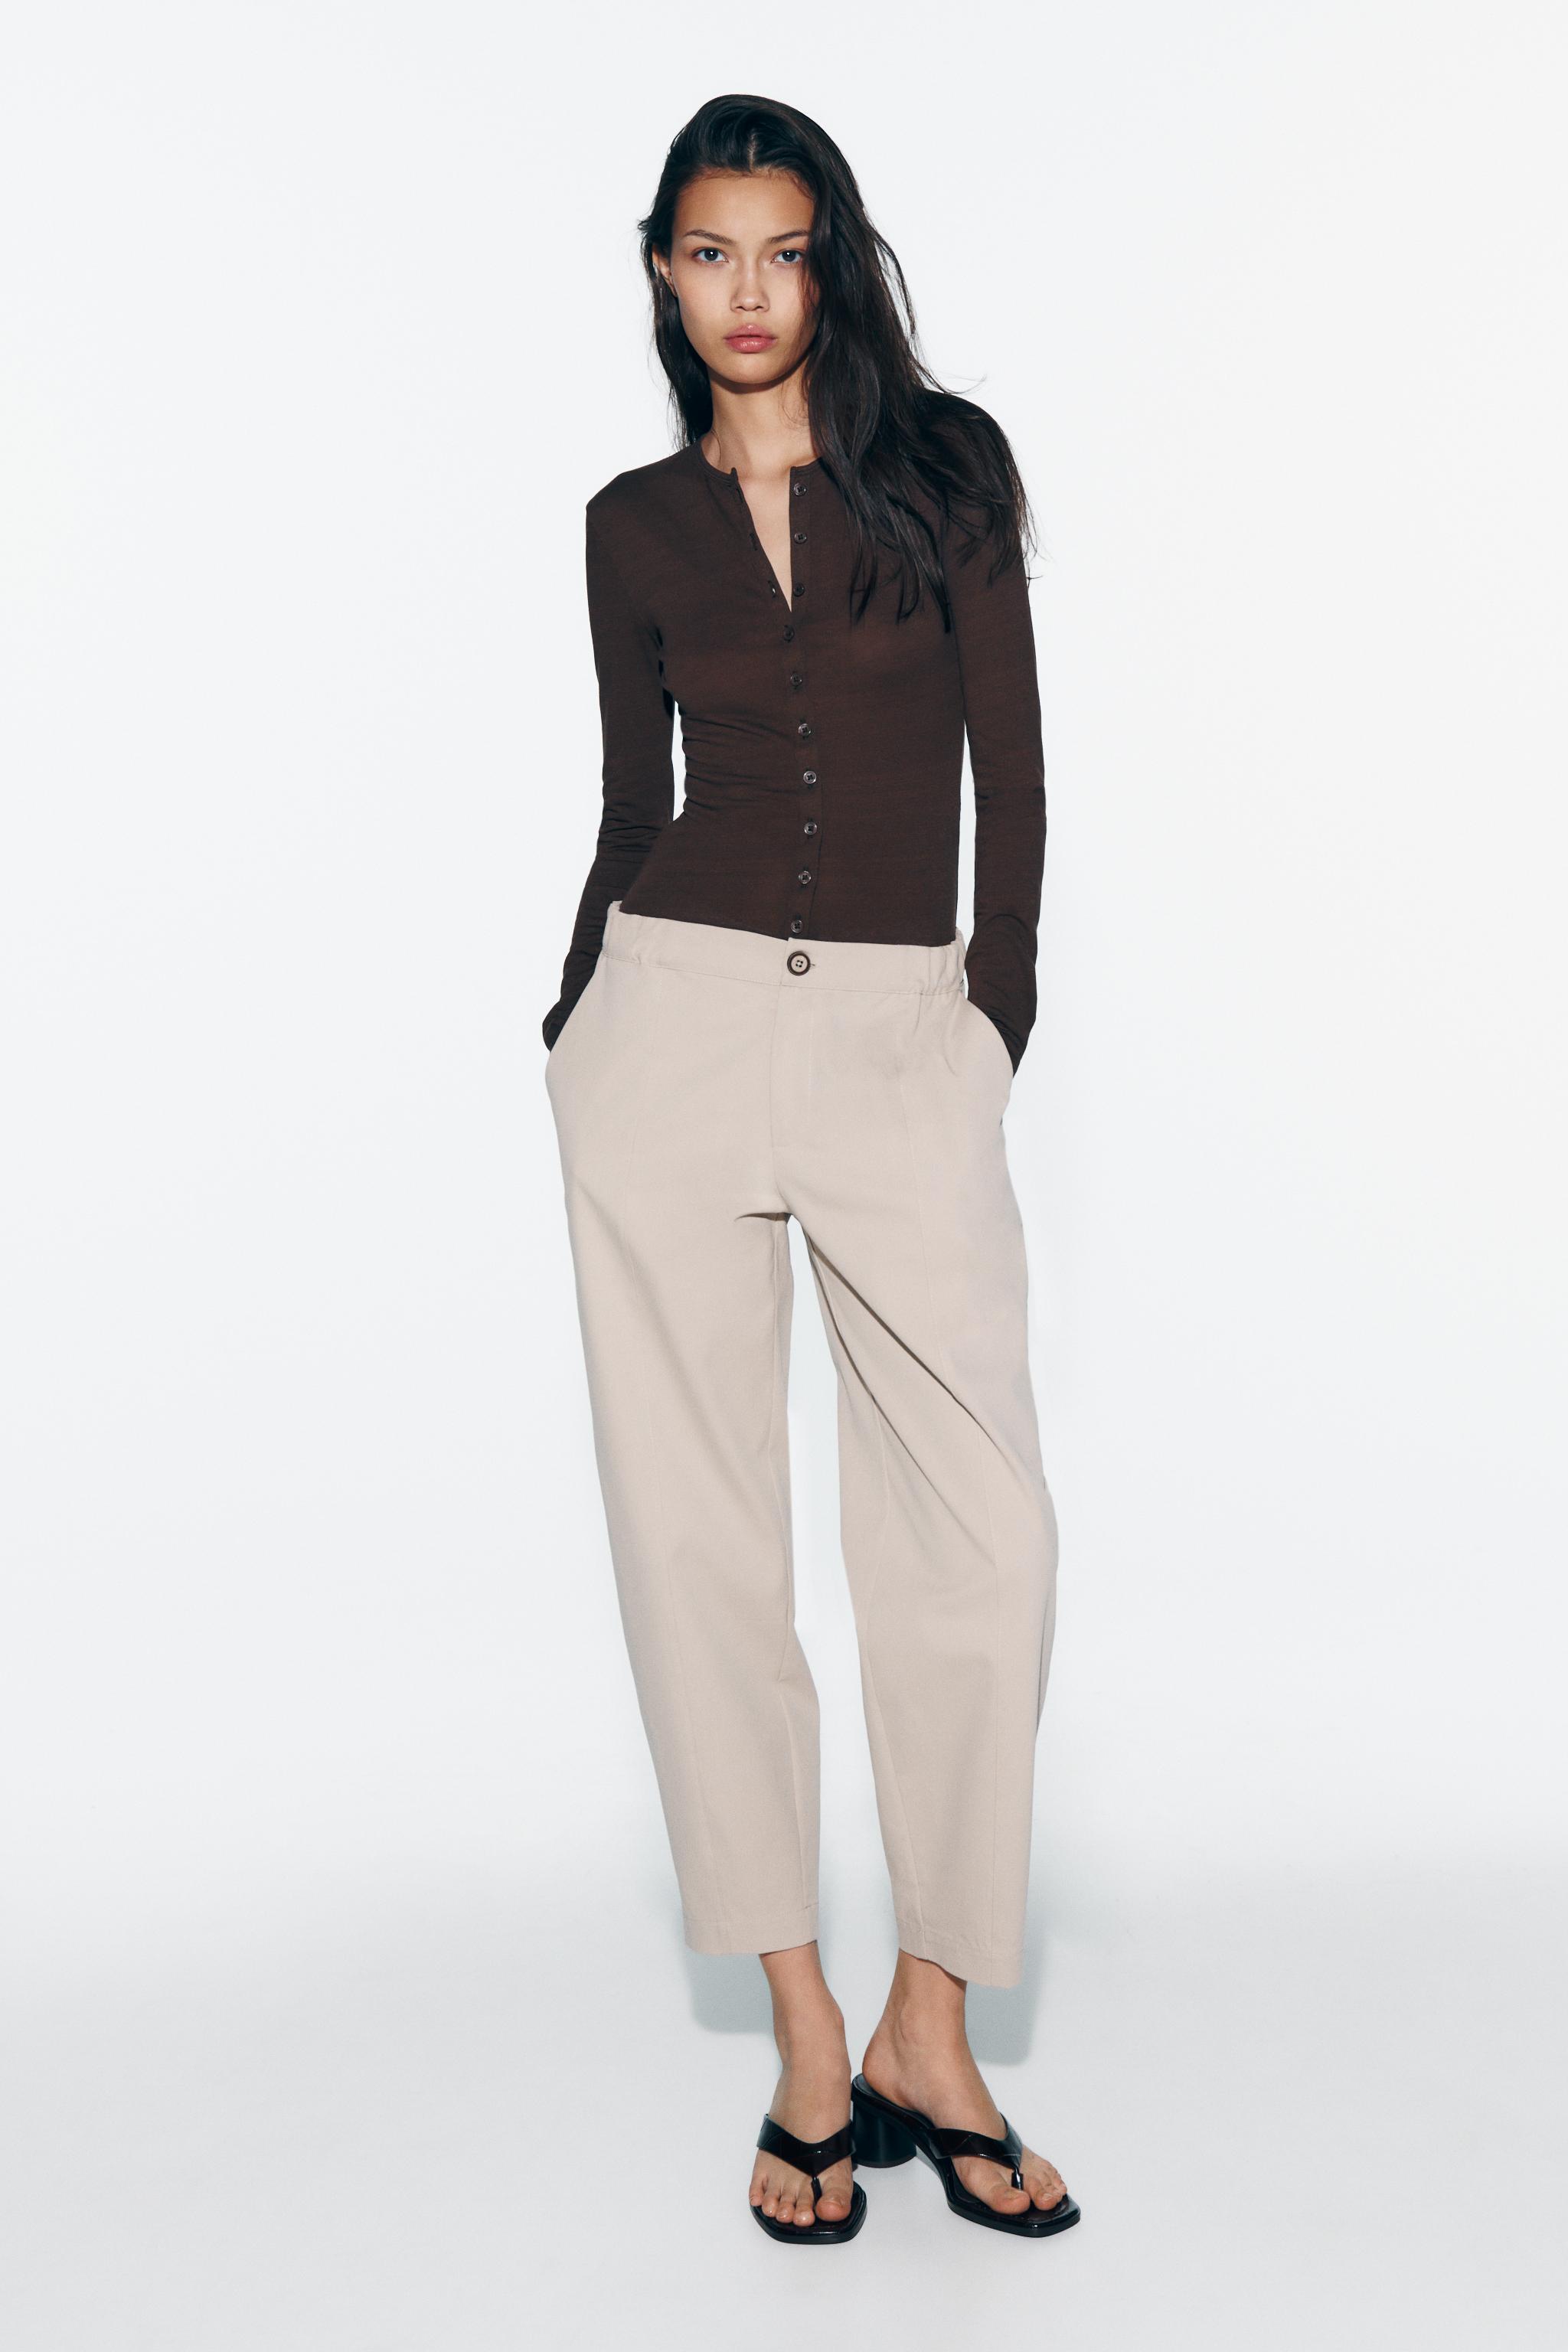 Zara, Pants & Jumpsuits, Zara Work Pants Blackplaid